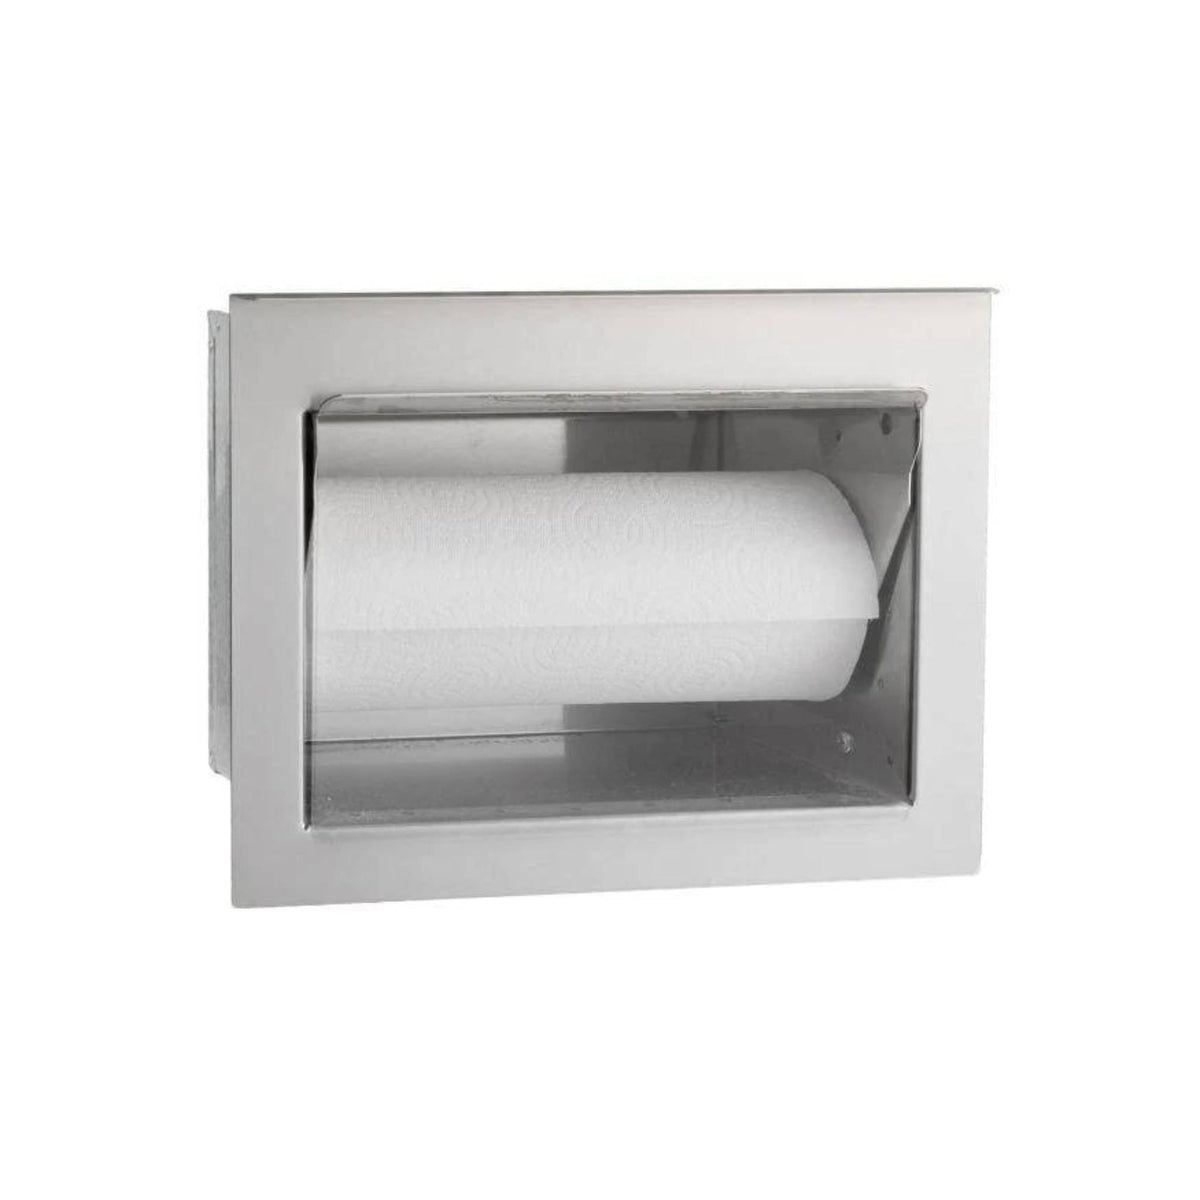 Fire Magic Paper Towel Holder 53812